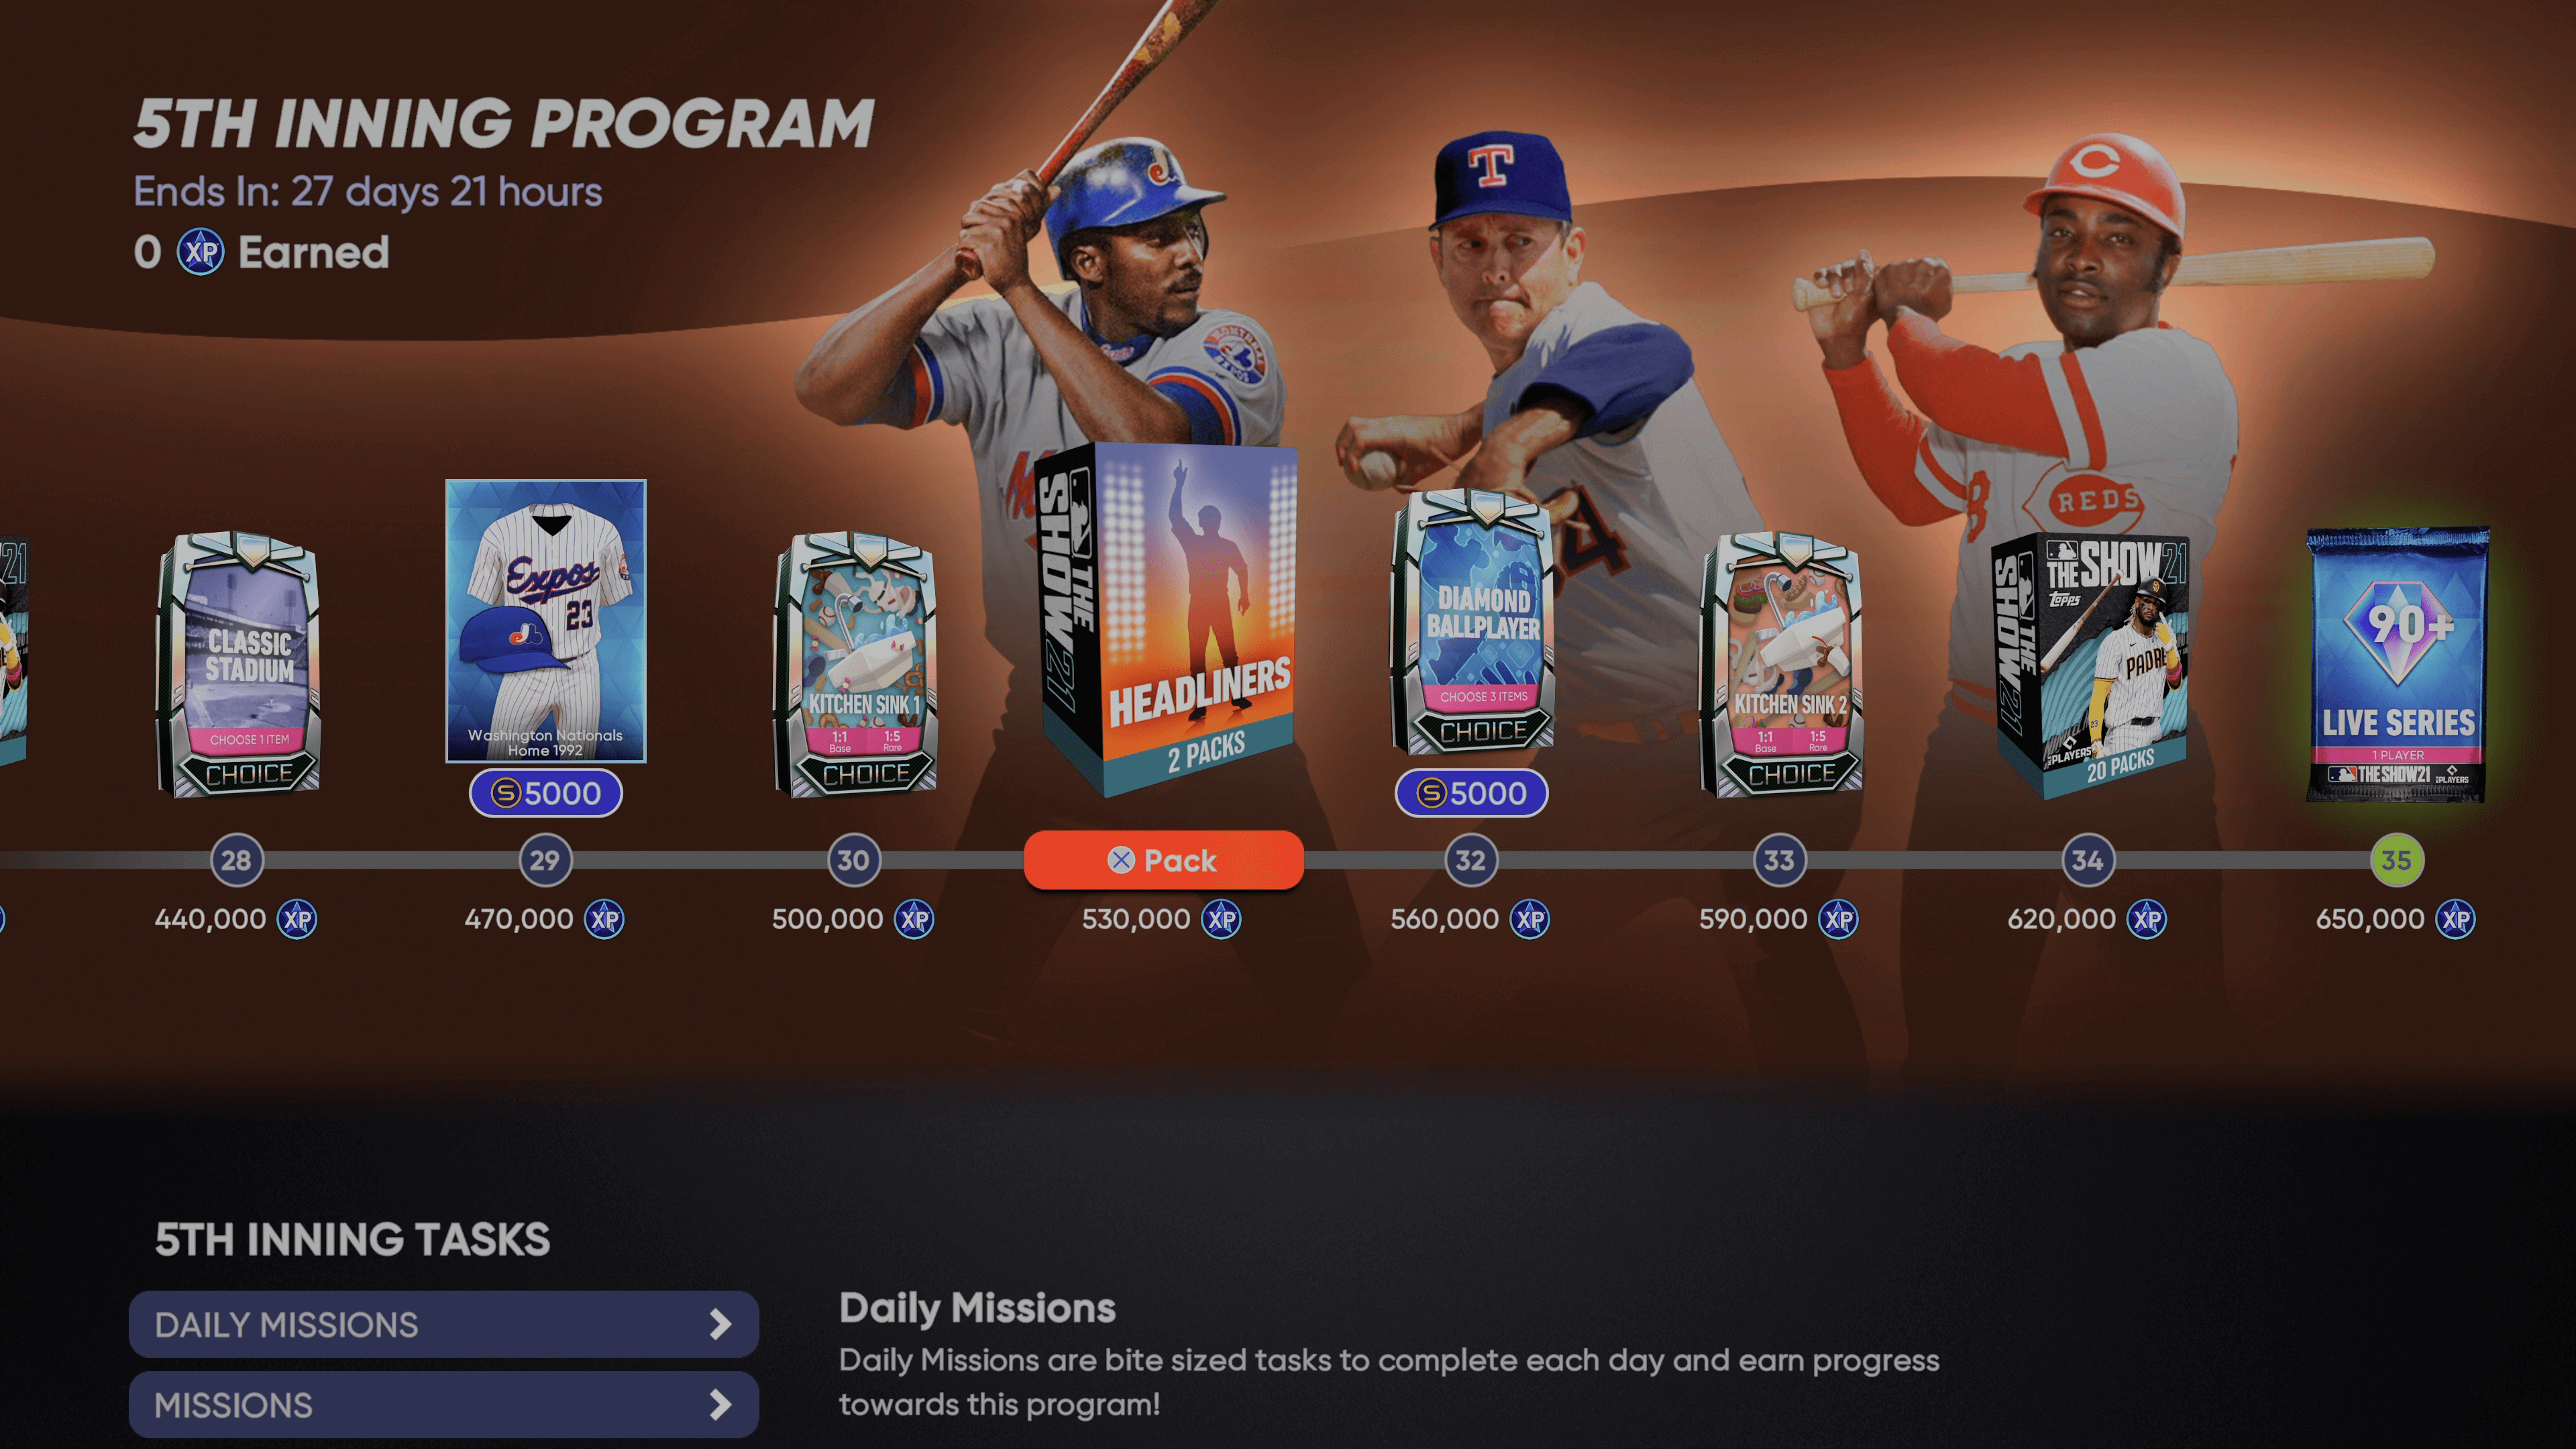 MLB The Show 21 11th Inning Program brings the endgame to Diamond